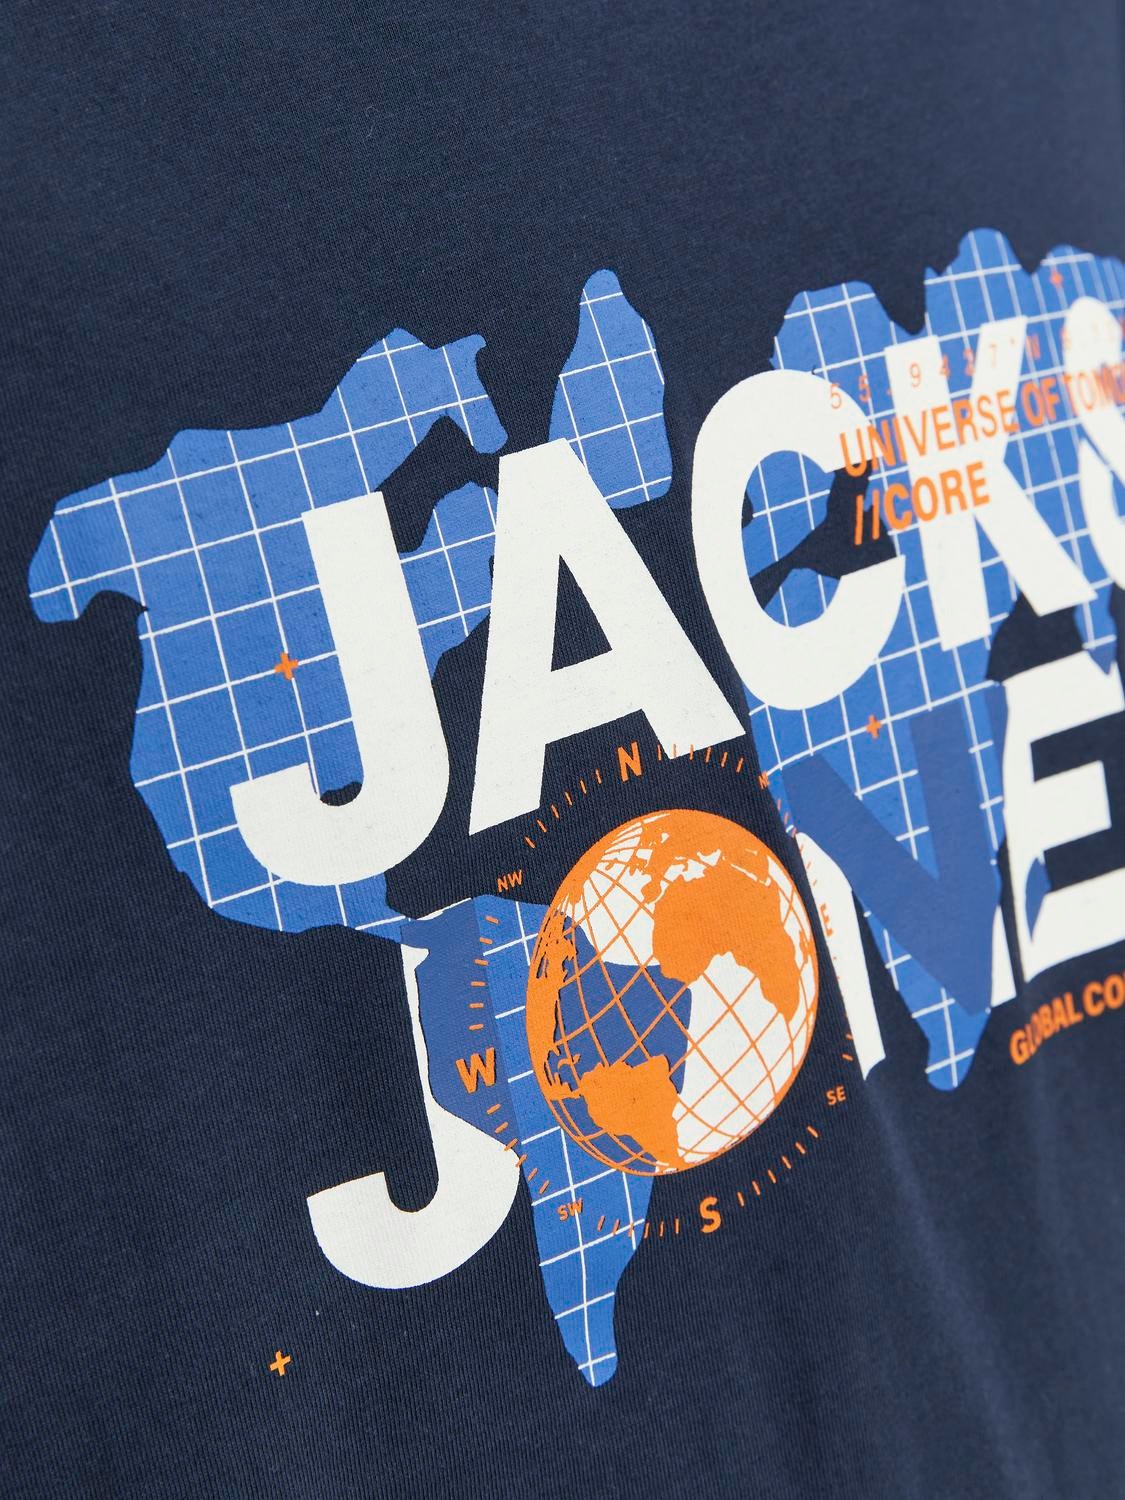 Jack & Jones Logotyp Rundringning T-shirt -Navy Blazer - 12240276